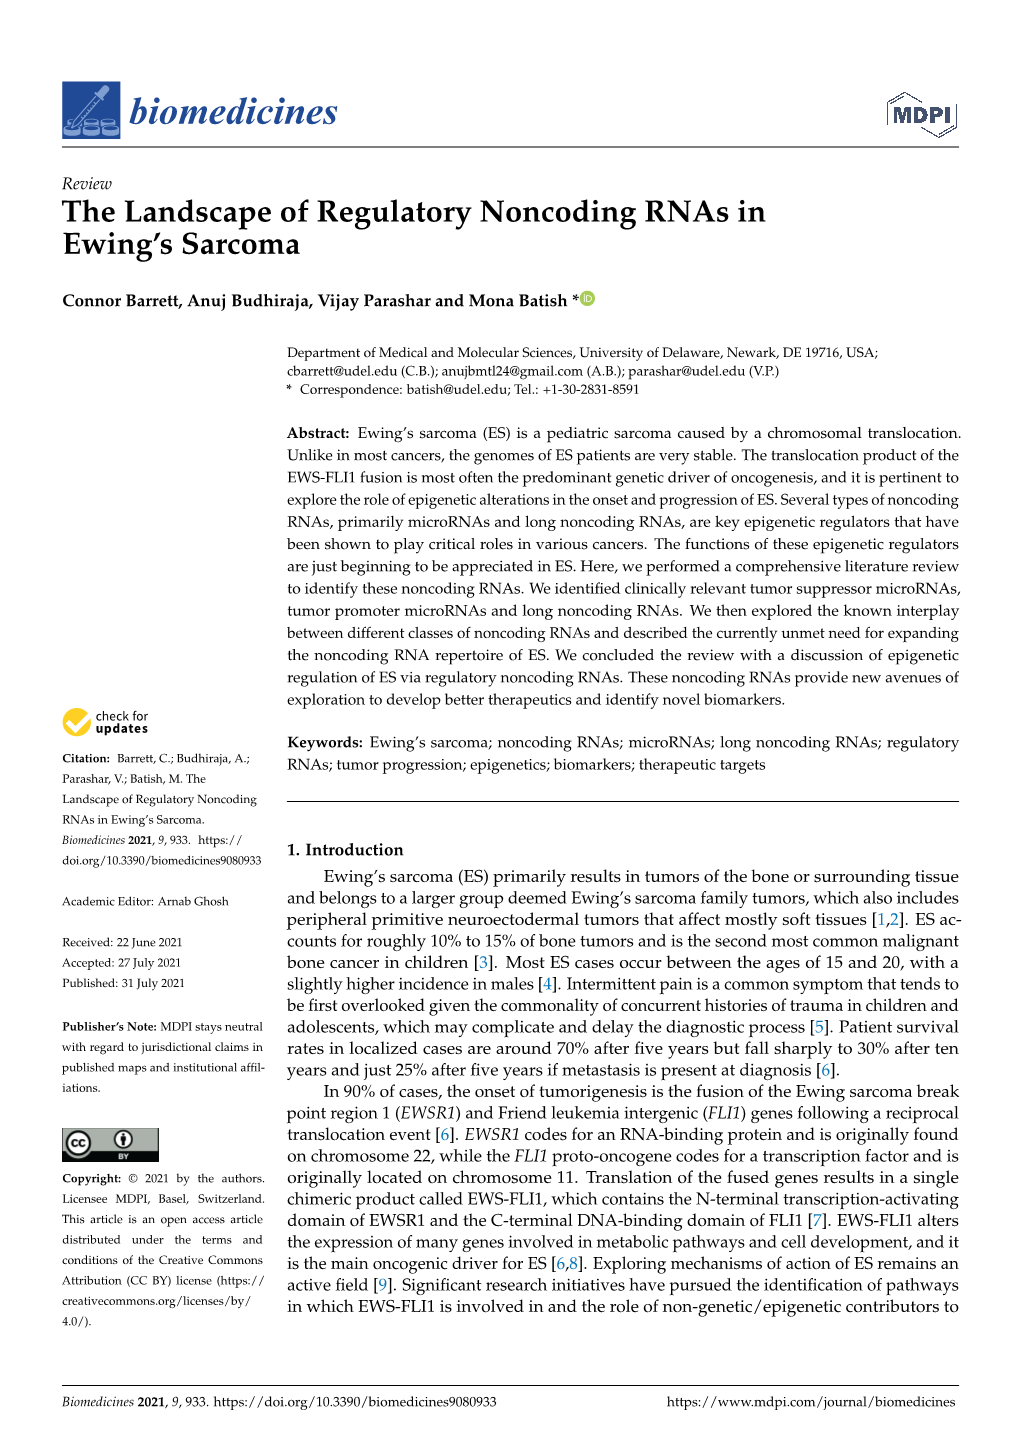 The Landscape of Regulatory Noncoding Rnas in Ewing's Sarcoma